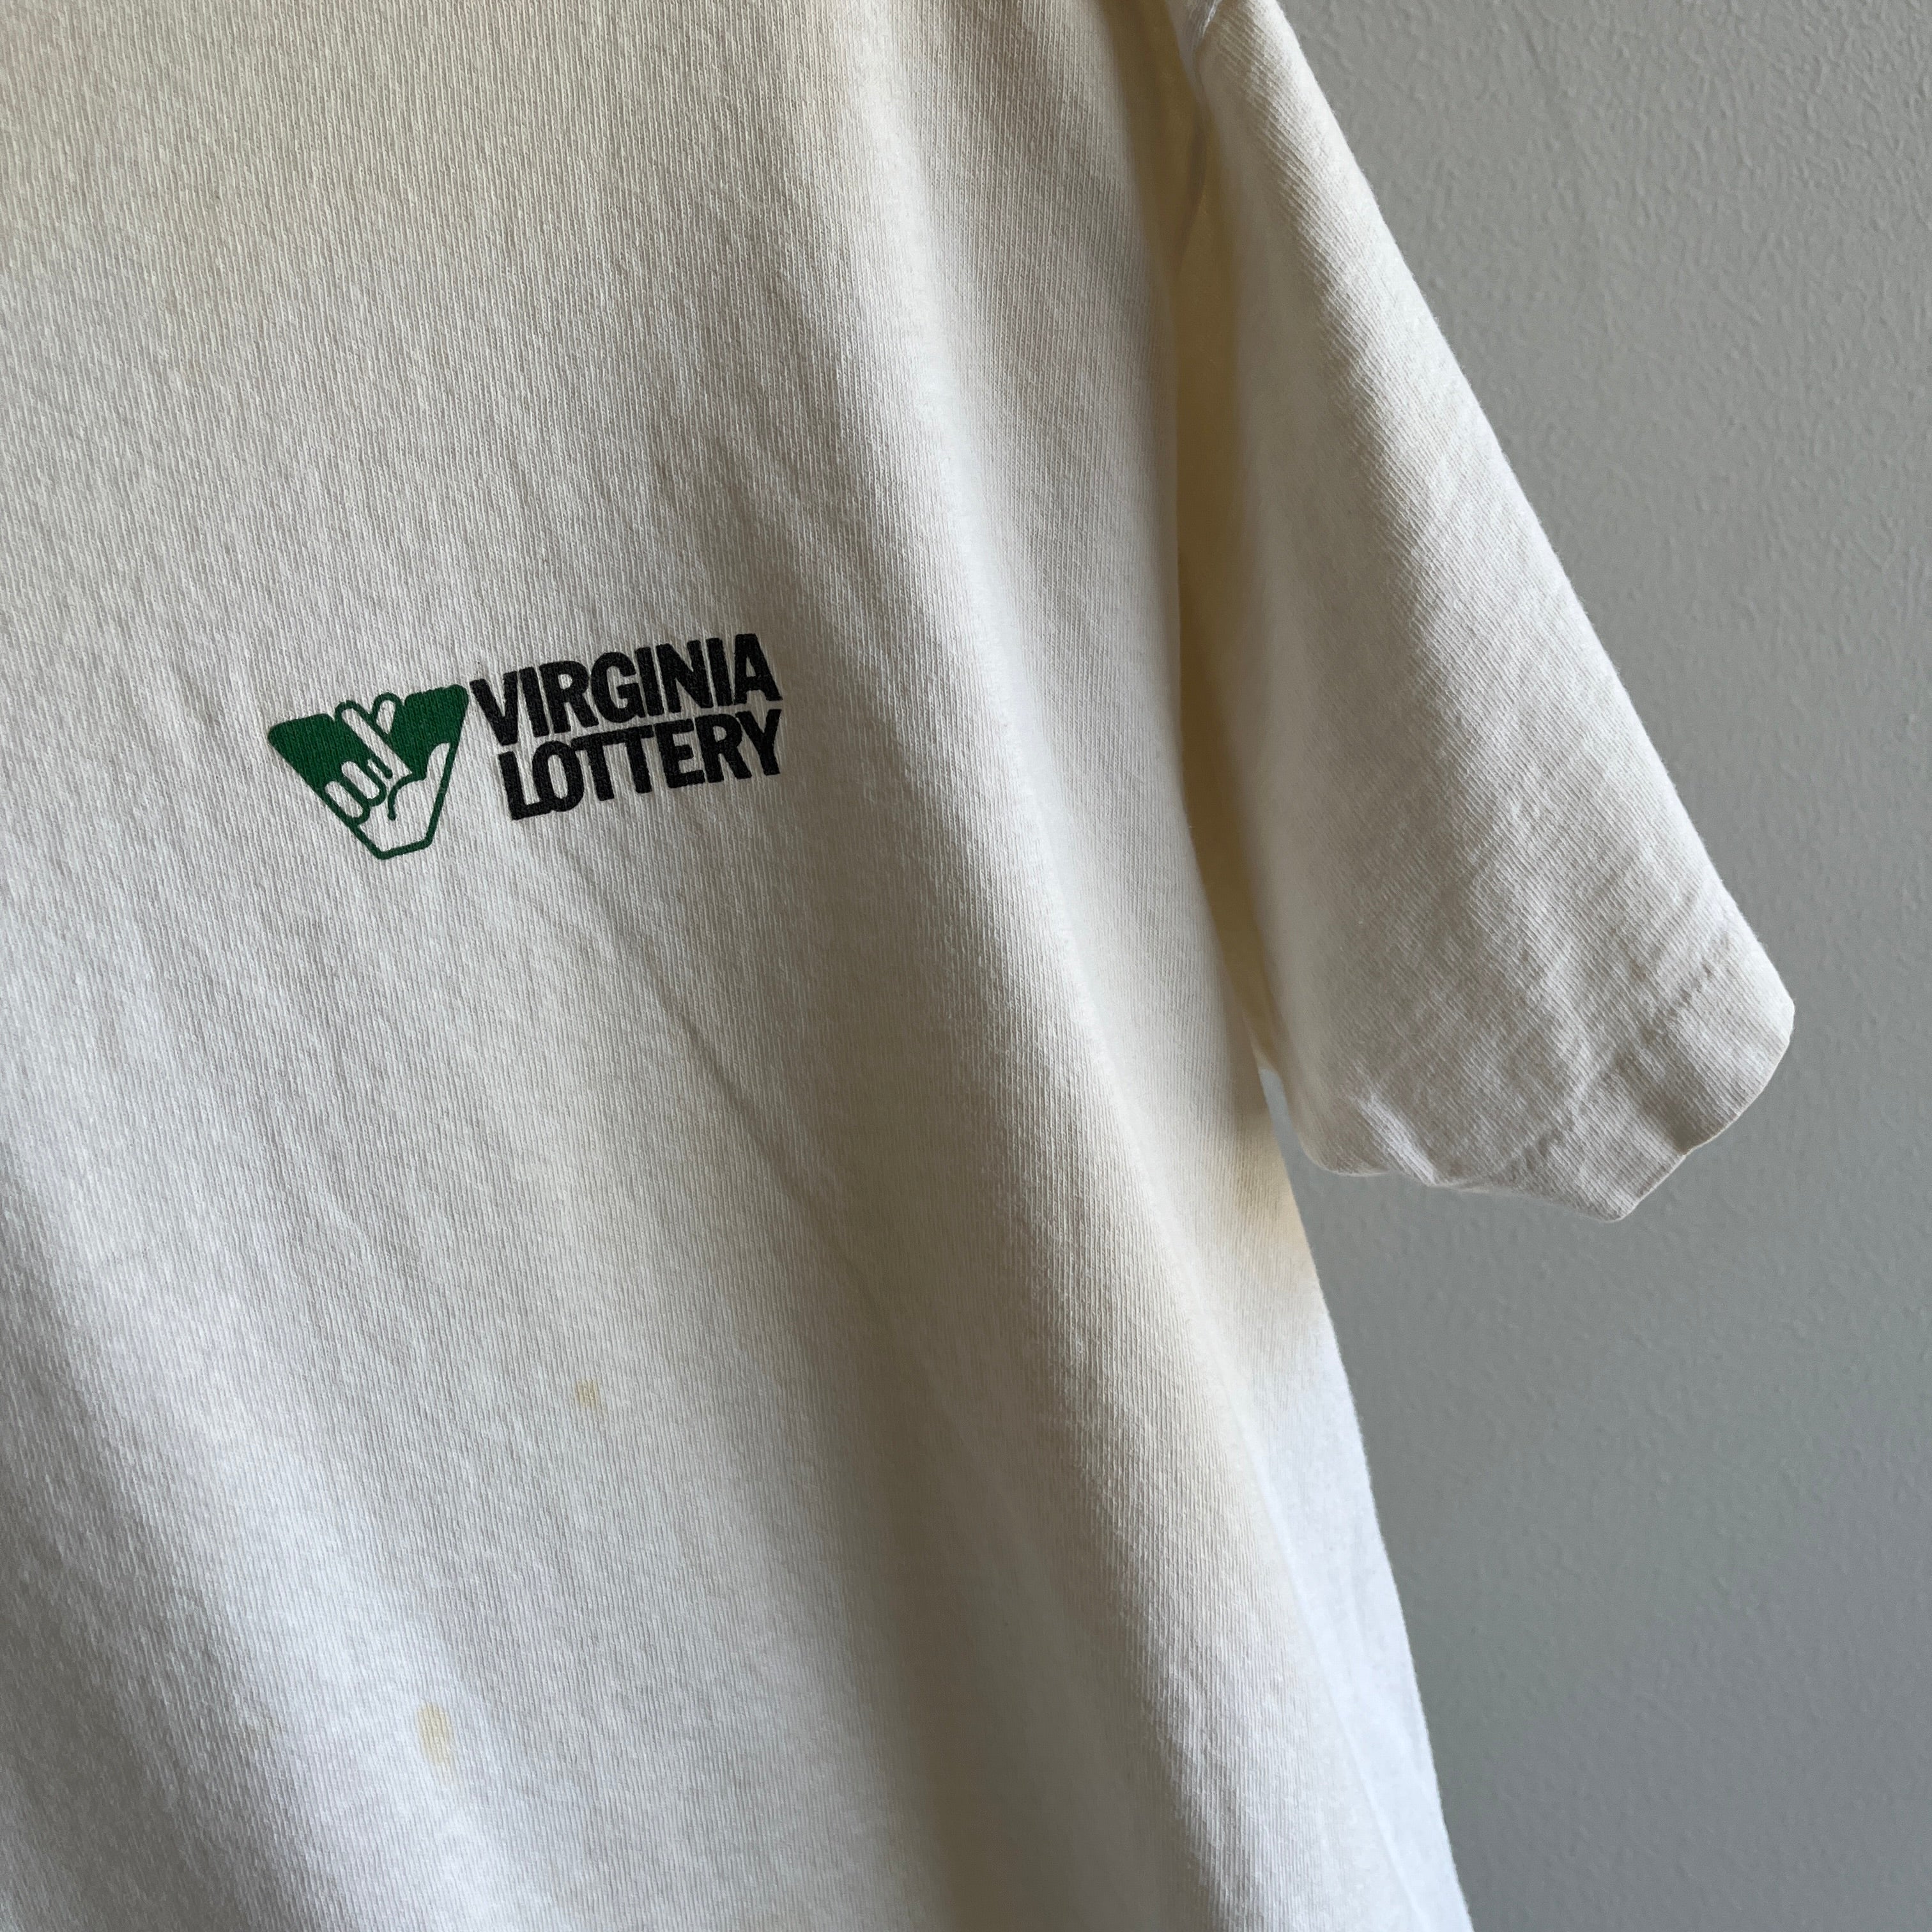 1980s Virginia Lottery Aged No Longer White T-Shirt